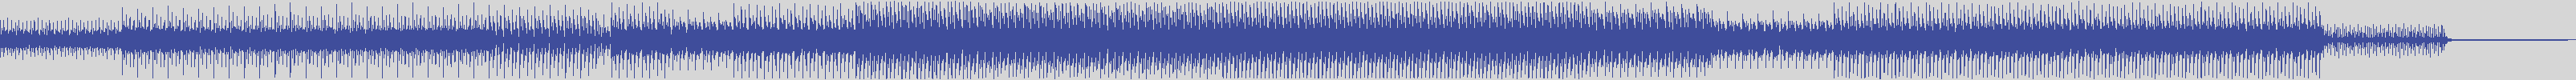 nf_boyz_records [NFY015] Dj Klingon - Systematic [Tribal Mix] audio wave form